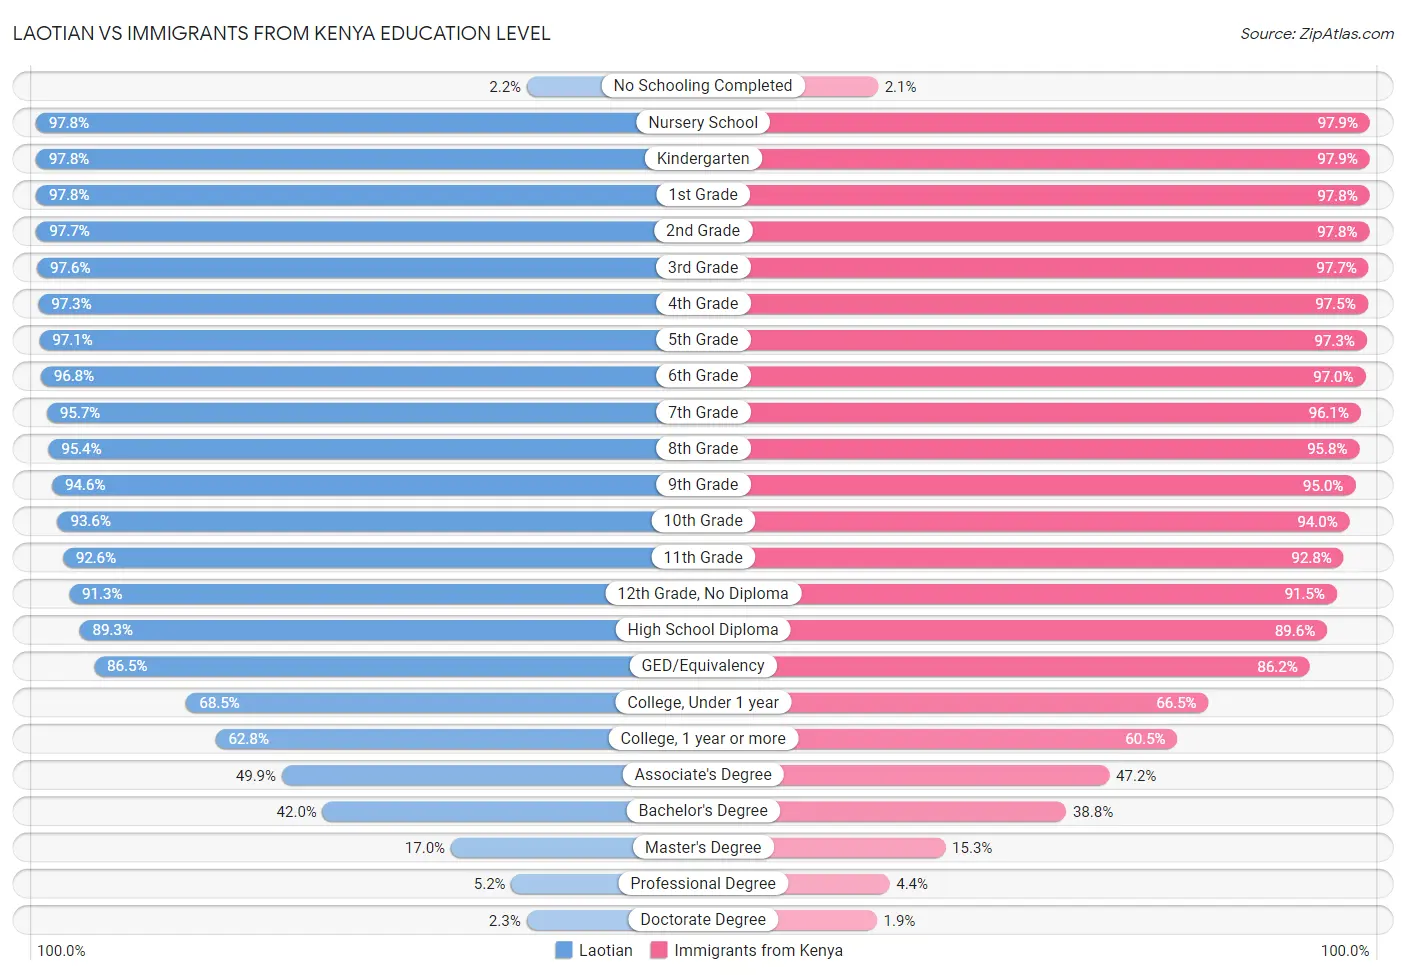 Laotian vs Immigrants from Kenya Education Level